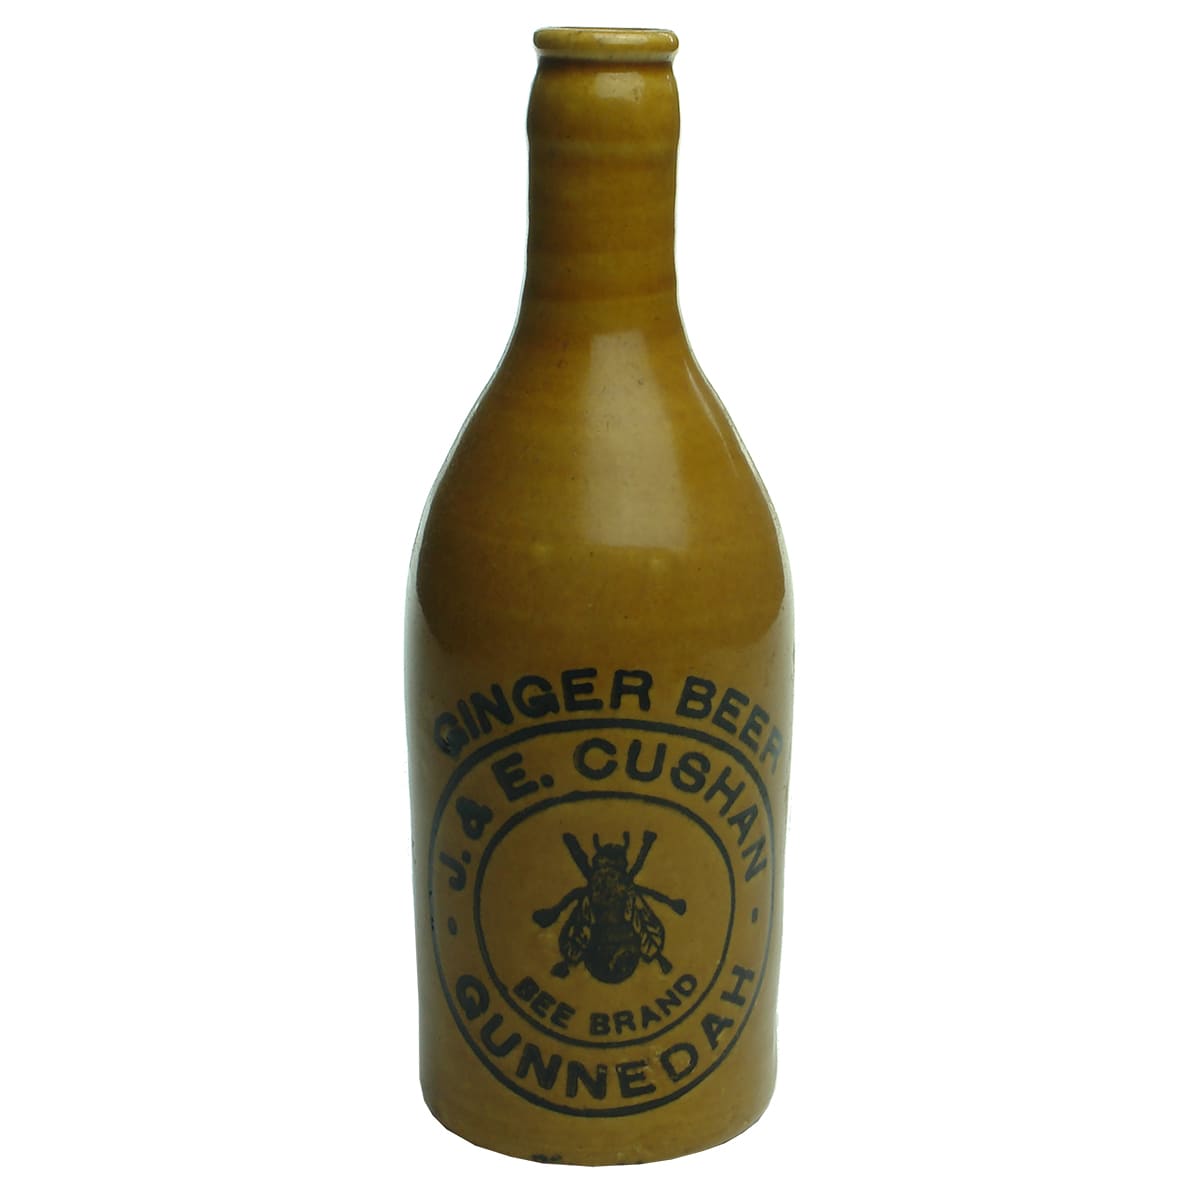 Ginger Beer. Cushan, Gunnedah. Champagne. Crown Seal. All Tan.